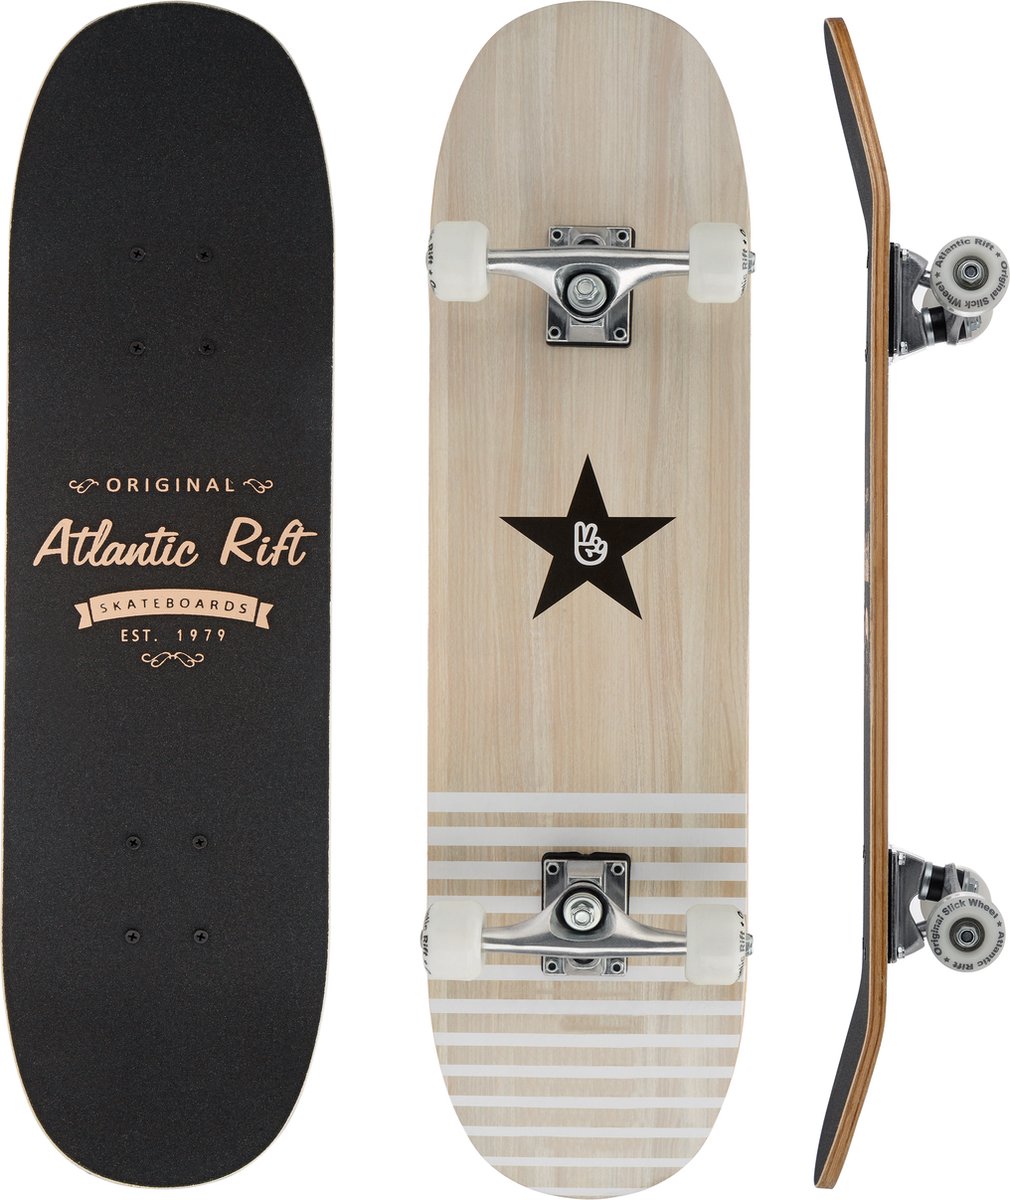 Atlantic Rift Skateboard - ABEC 9 Kogellagers - 80x24cm - met ster